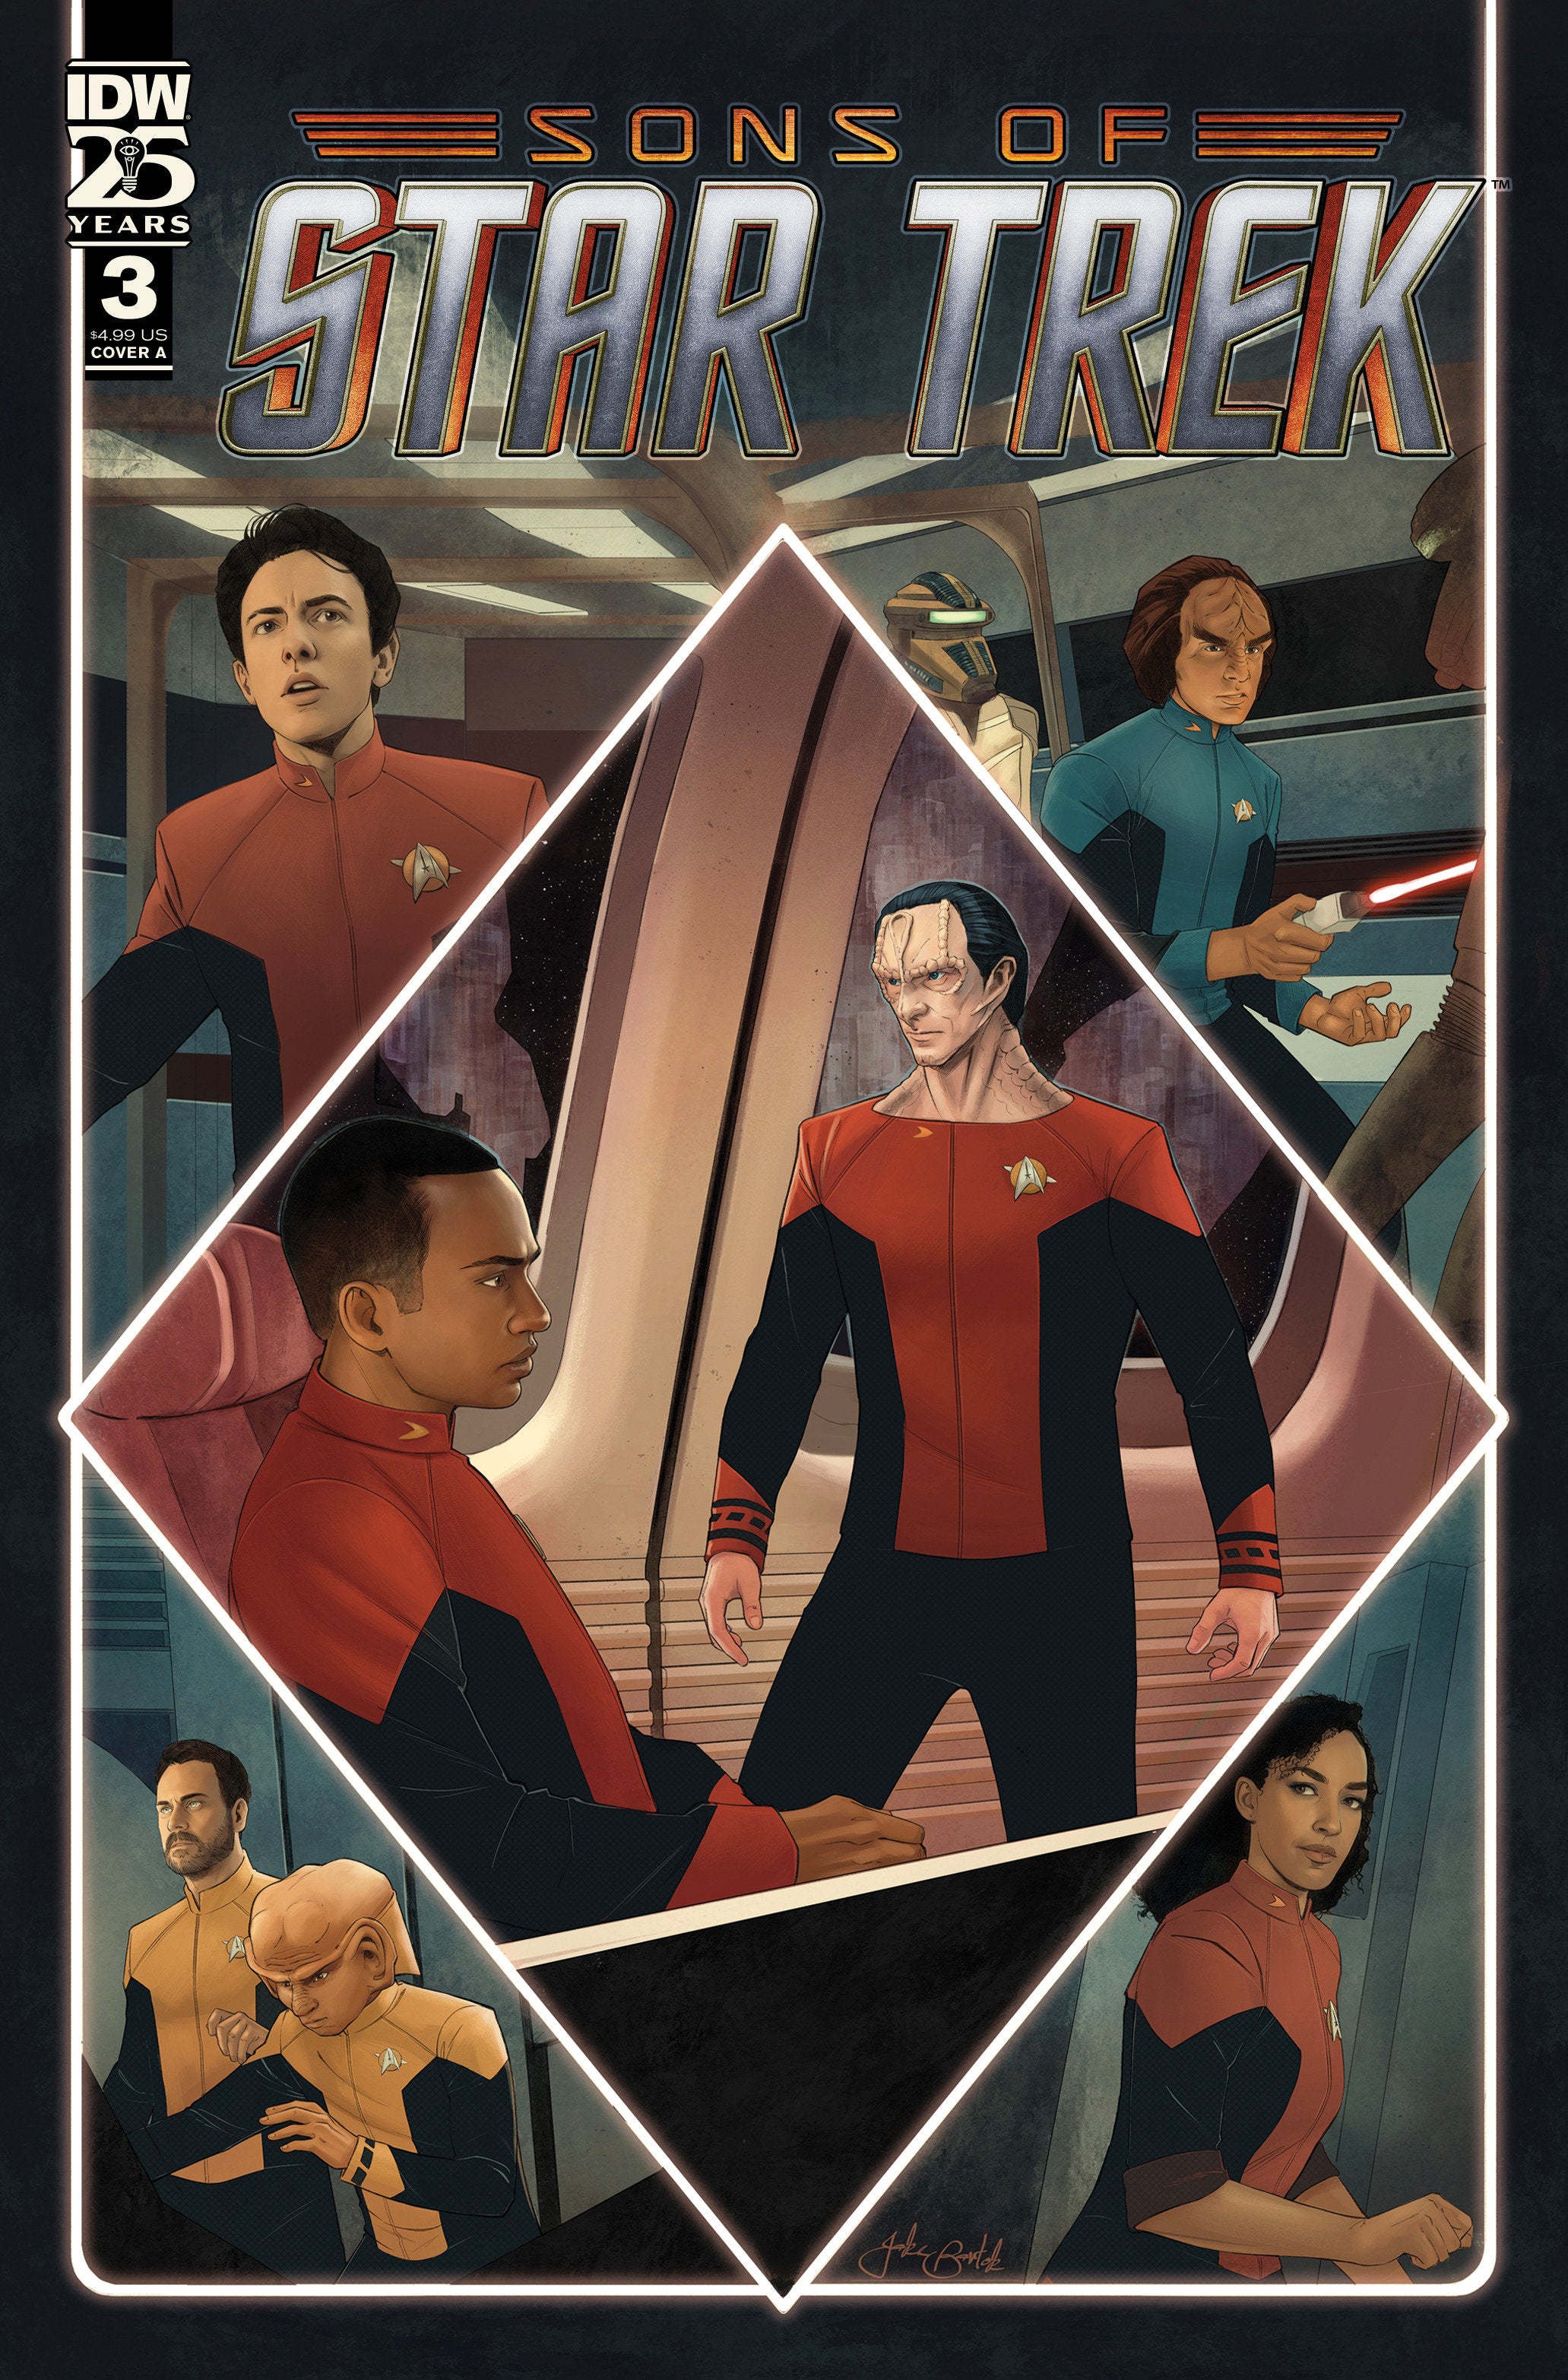 Star Trek: Sons Of Star Trek #3 Cover A (Bartok) | Game Master's Emporium (The New GME)